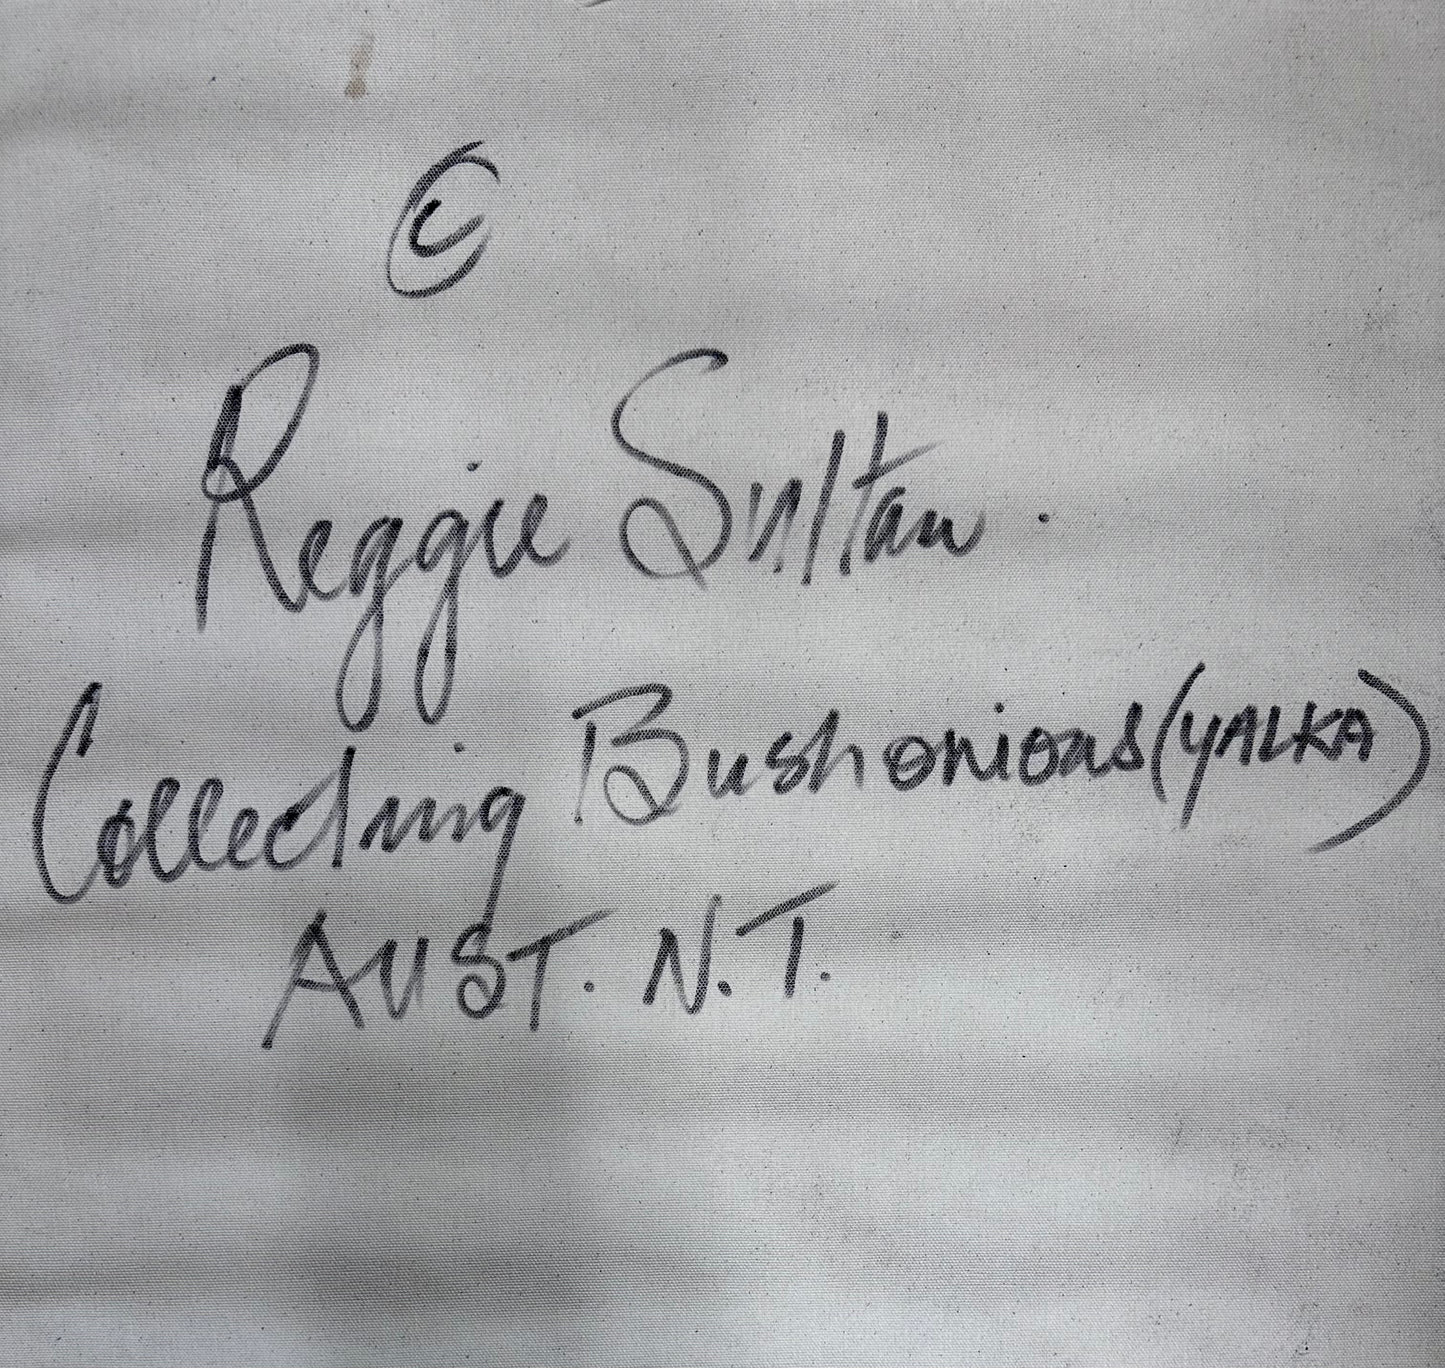 'Collecting Bush Yalka’ - Reggie Sultan